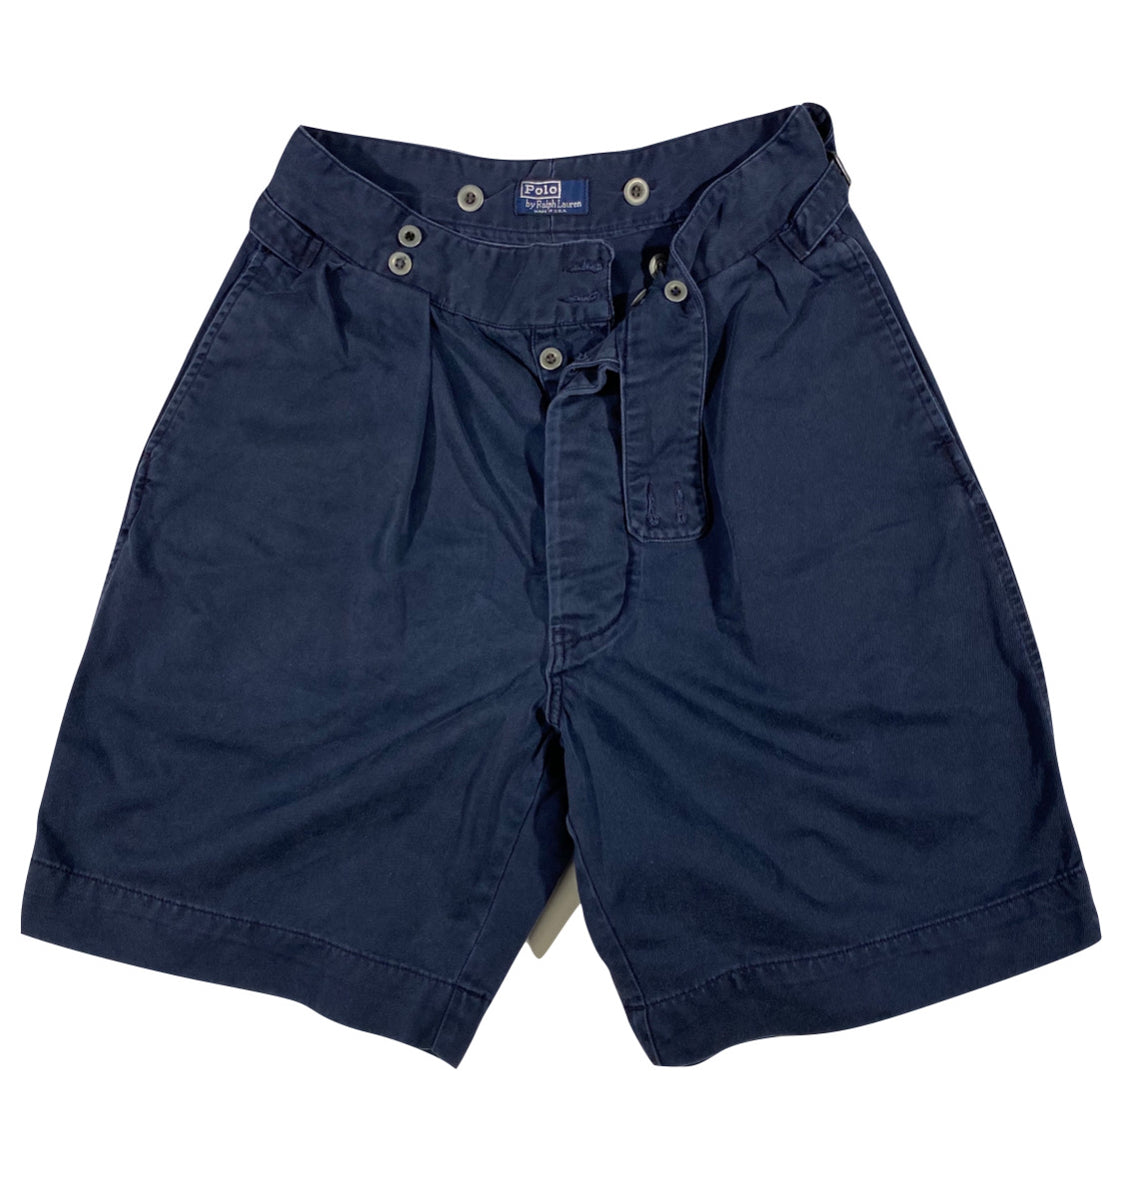 Ralph Lauren Made in USA 2tuck shorts-